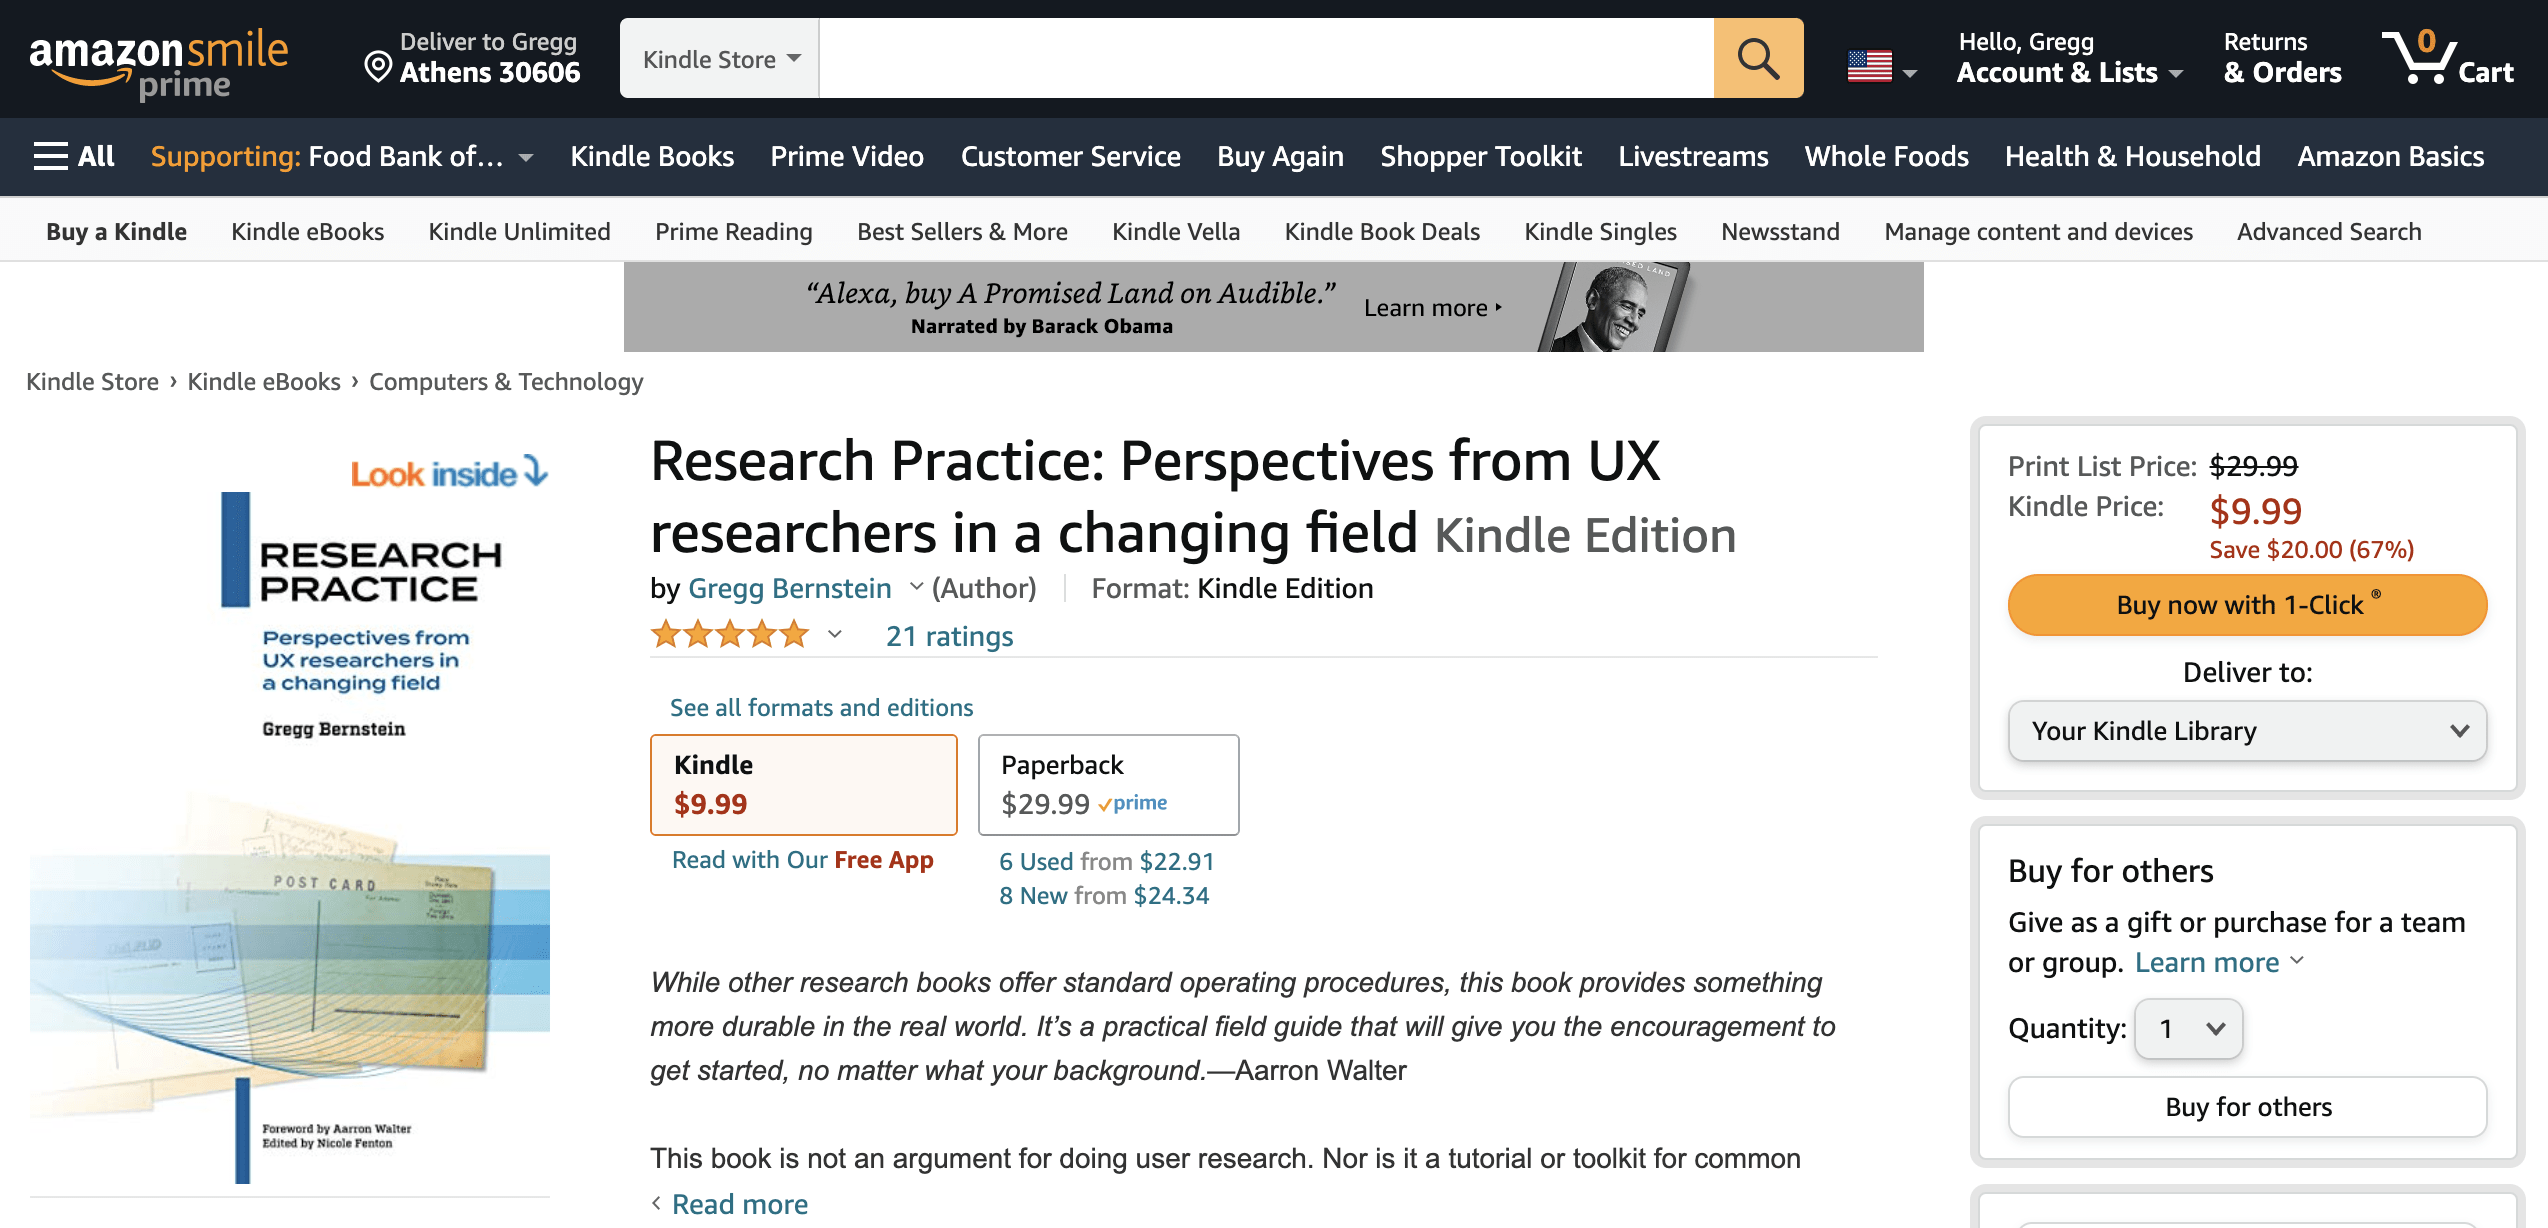 Research Practice on Amazon